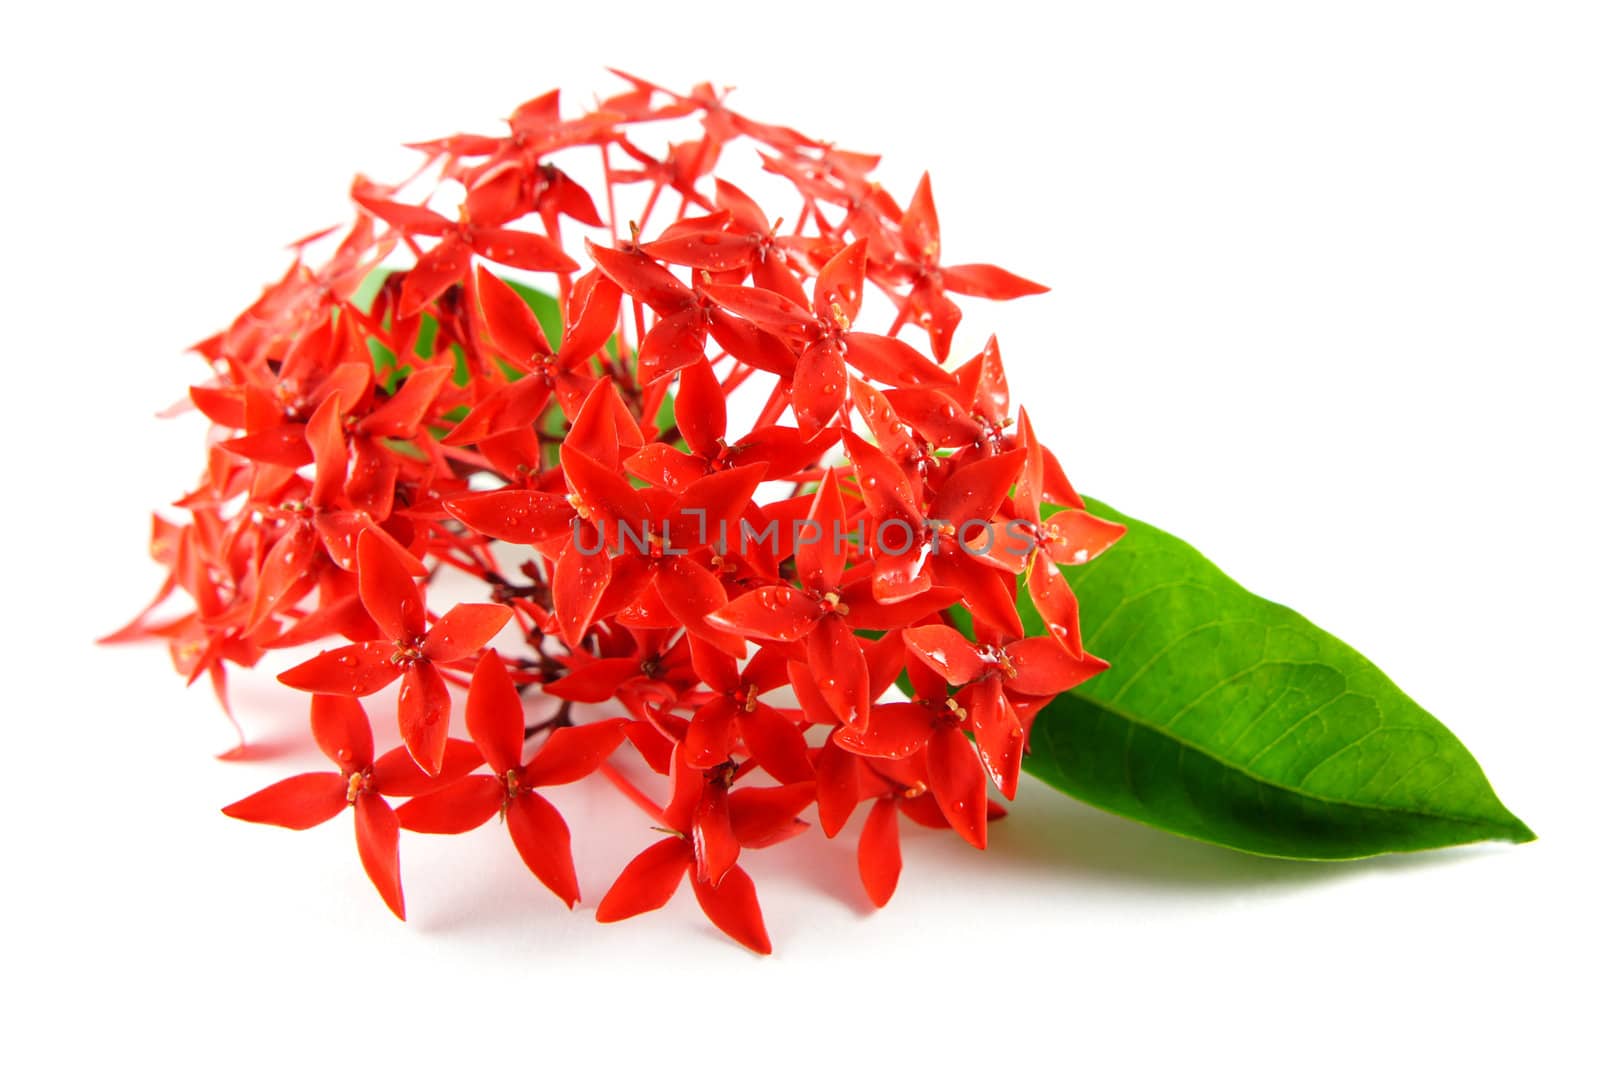 Red Flowers with Green Leaf by kbuntu